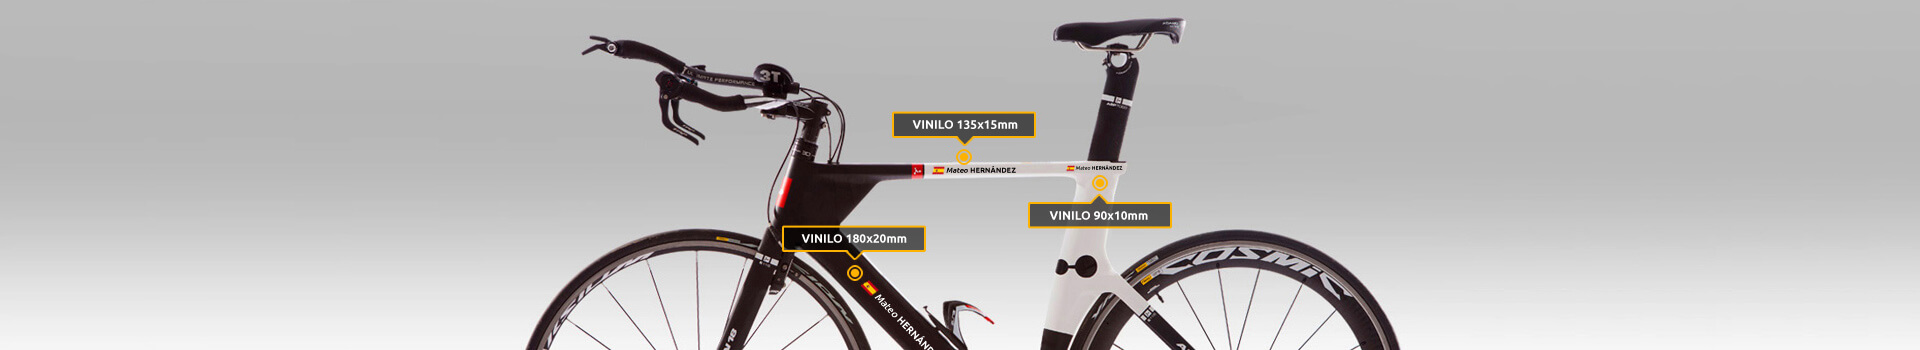 Pegatinas personalizadas para bicicletas -